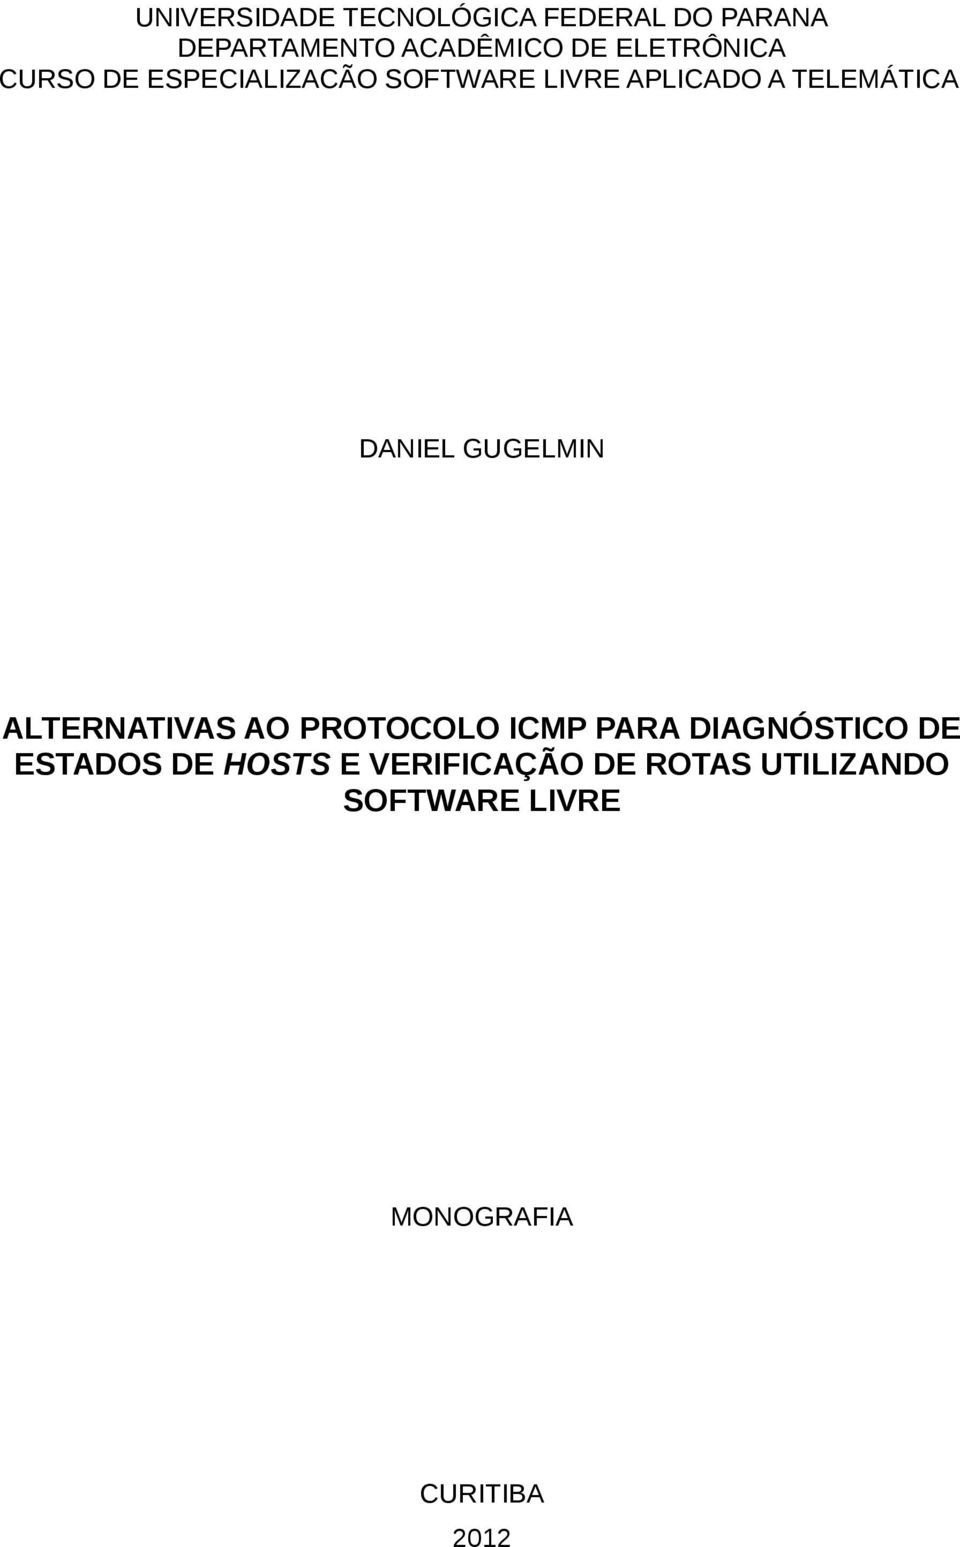 DANIEL GUGELMIN ALTERNATIVAS AO PROTOCOLO ICMP PARA DIAGNÓSTICO DE ESTADOS